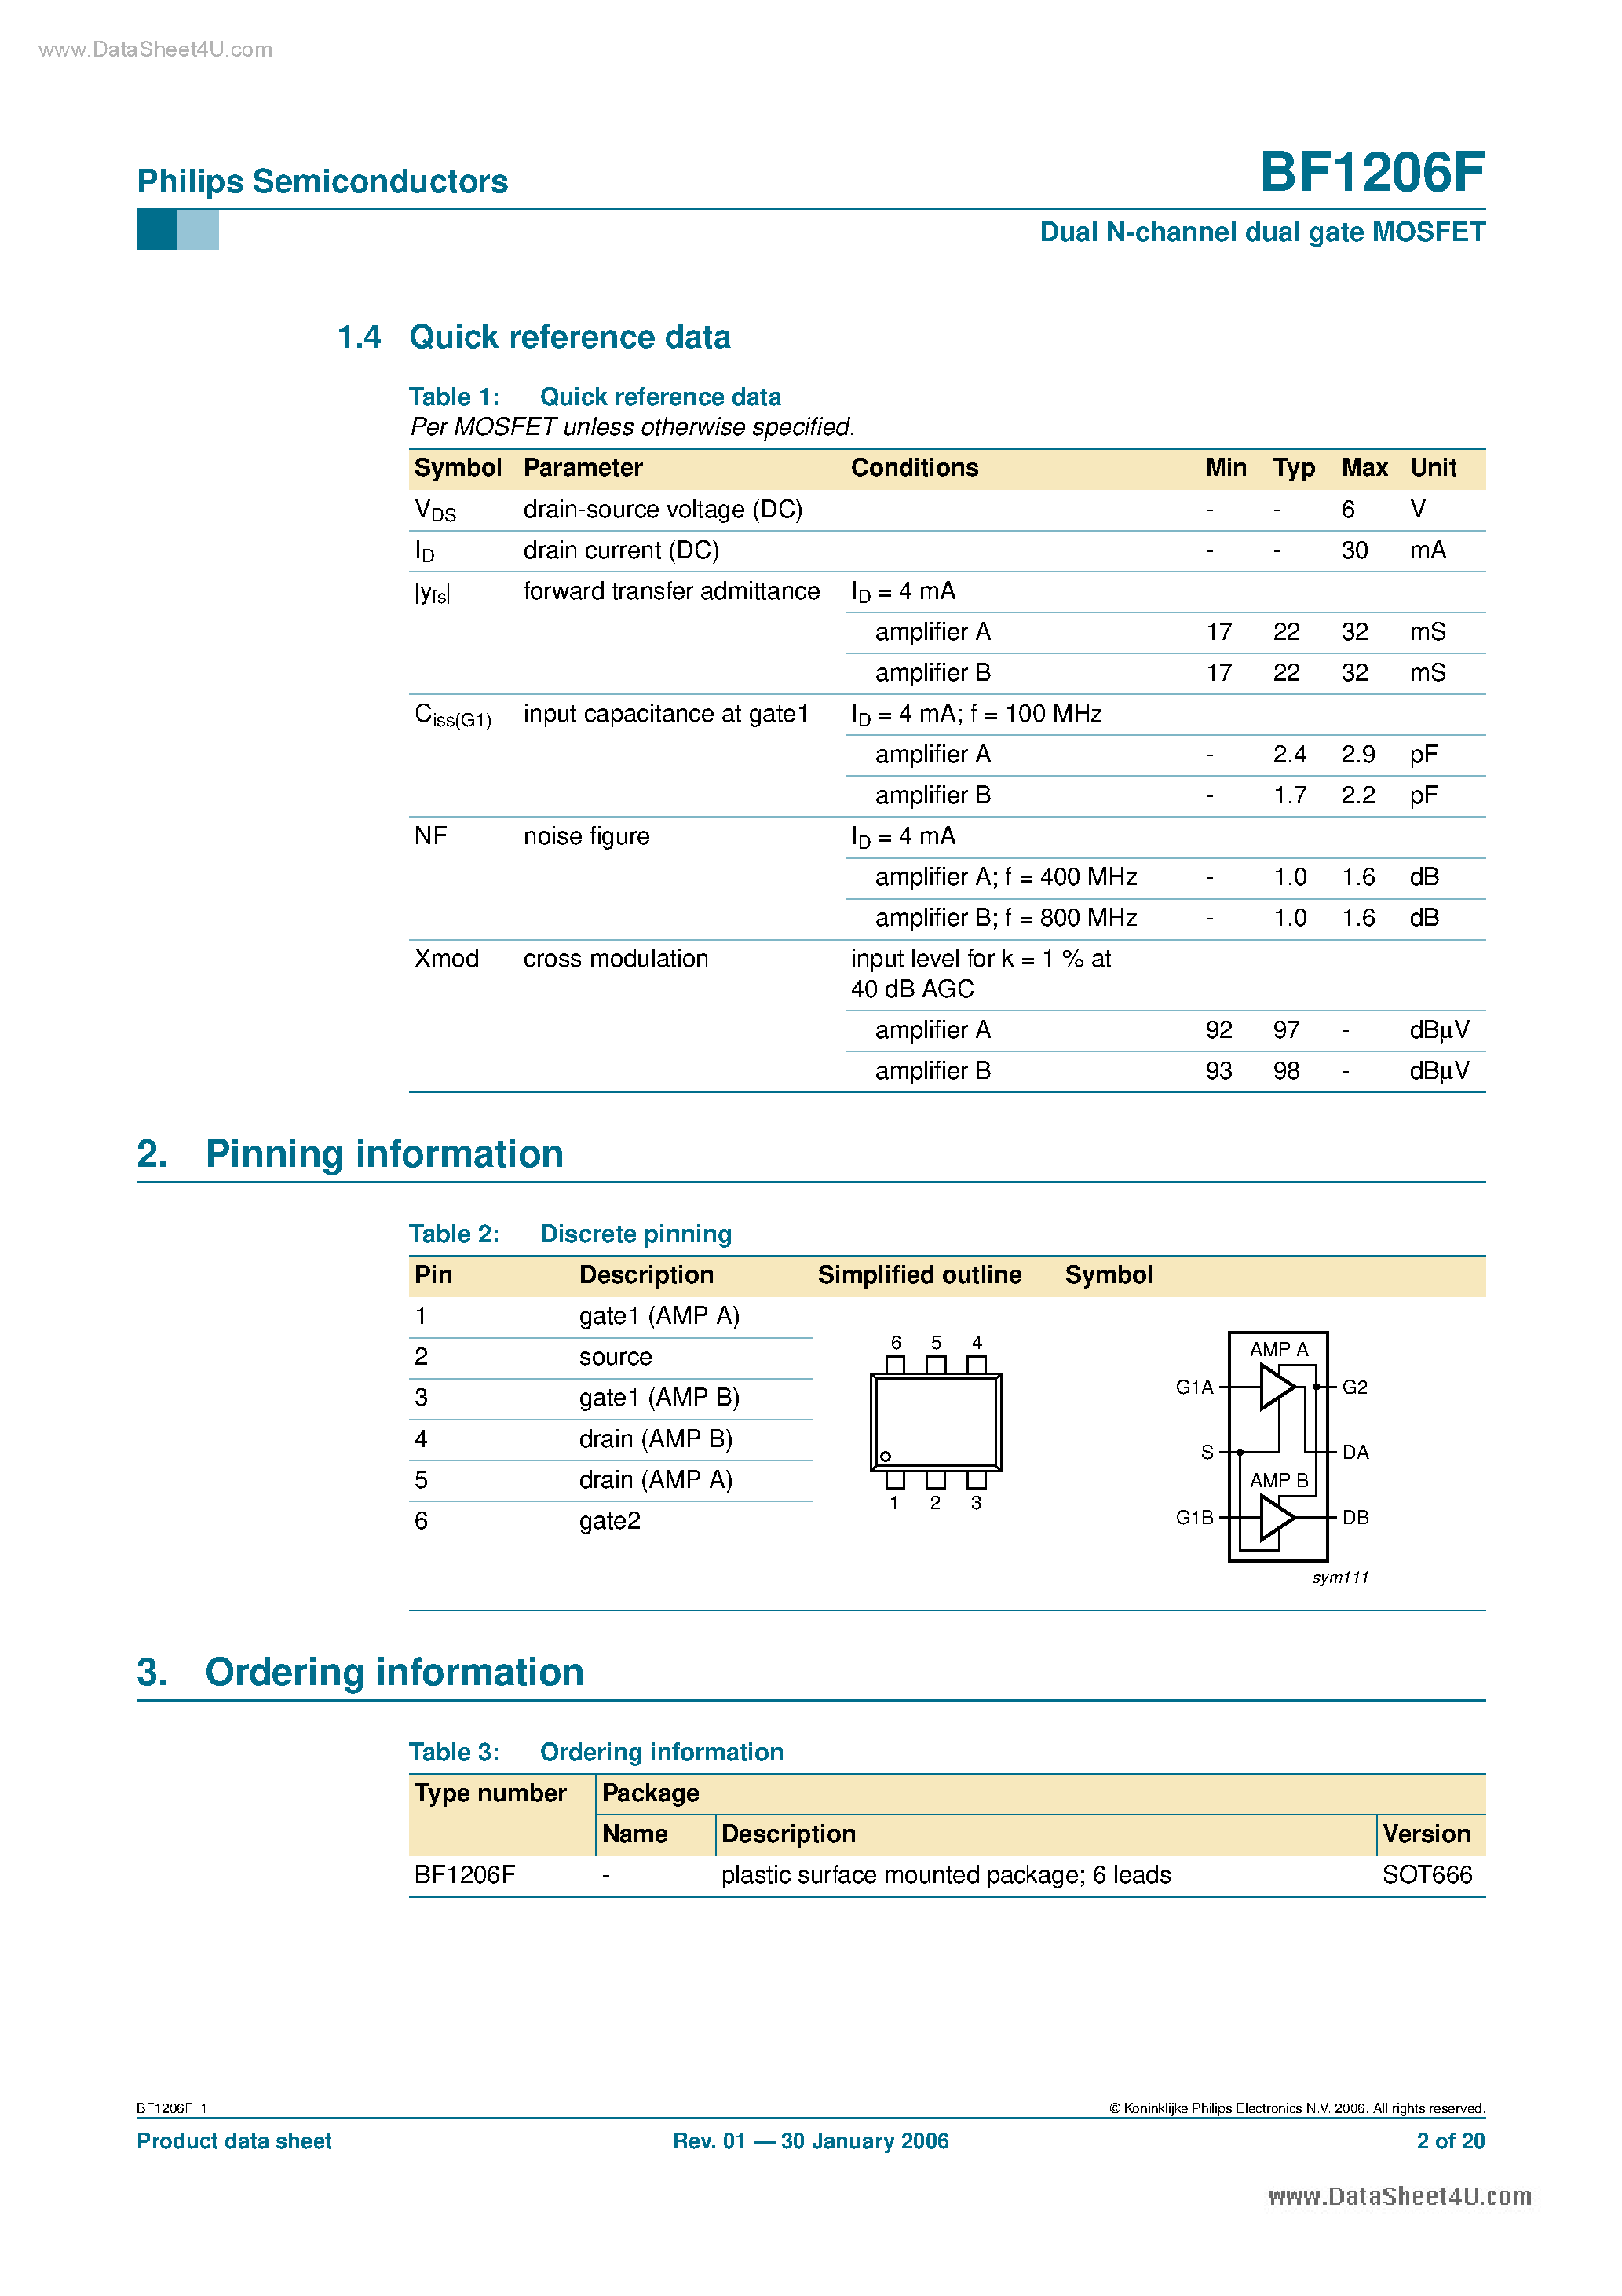 Datasheet BF1206F - Dual N-channel dual-gate MOS-FET page 2